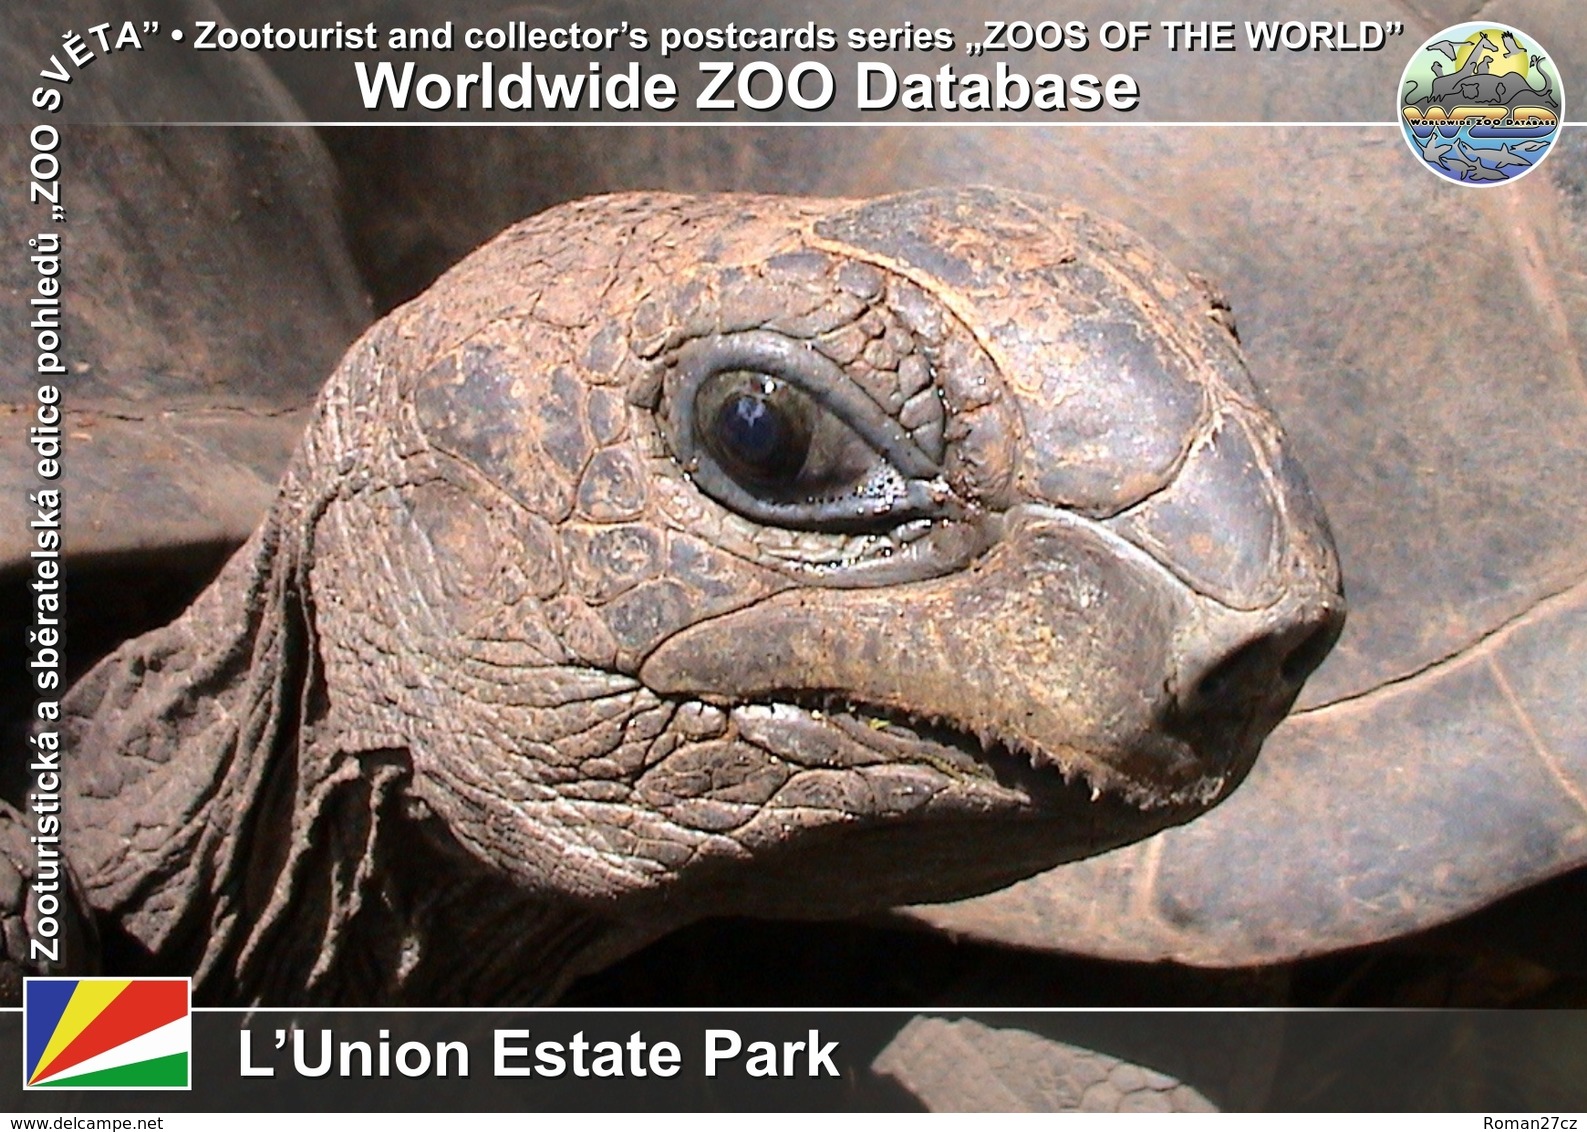 026 L'Union Estate Park, SC - Giant Tortoise (Aldabrachelys Gigantea) - Seychelles